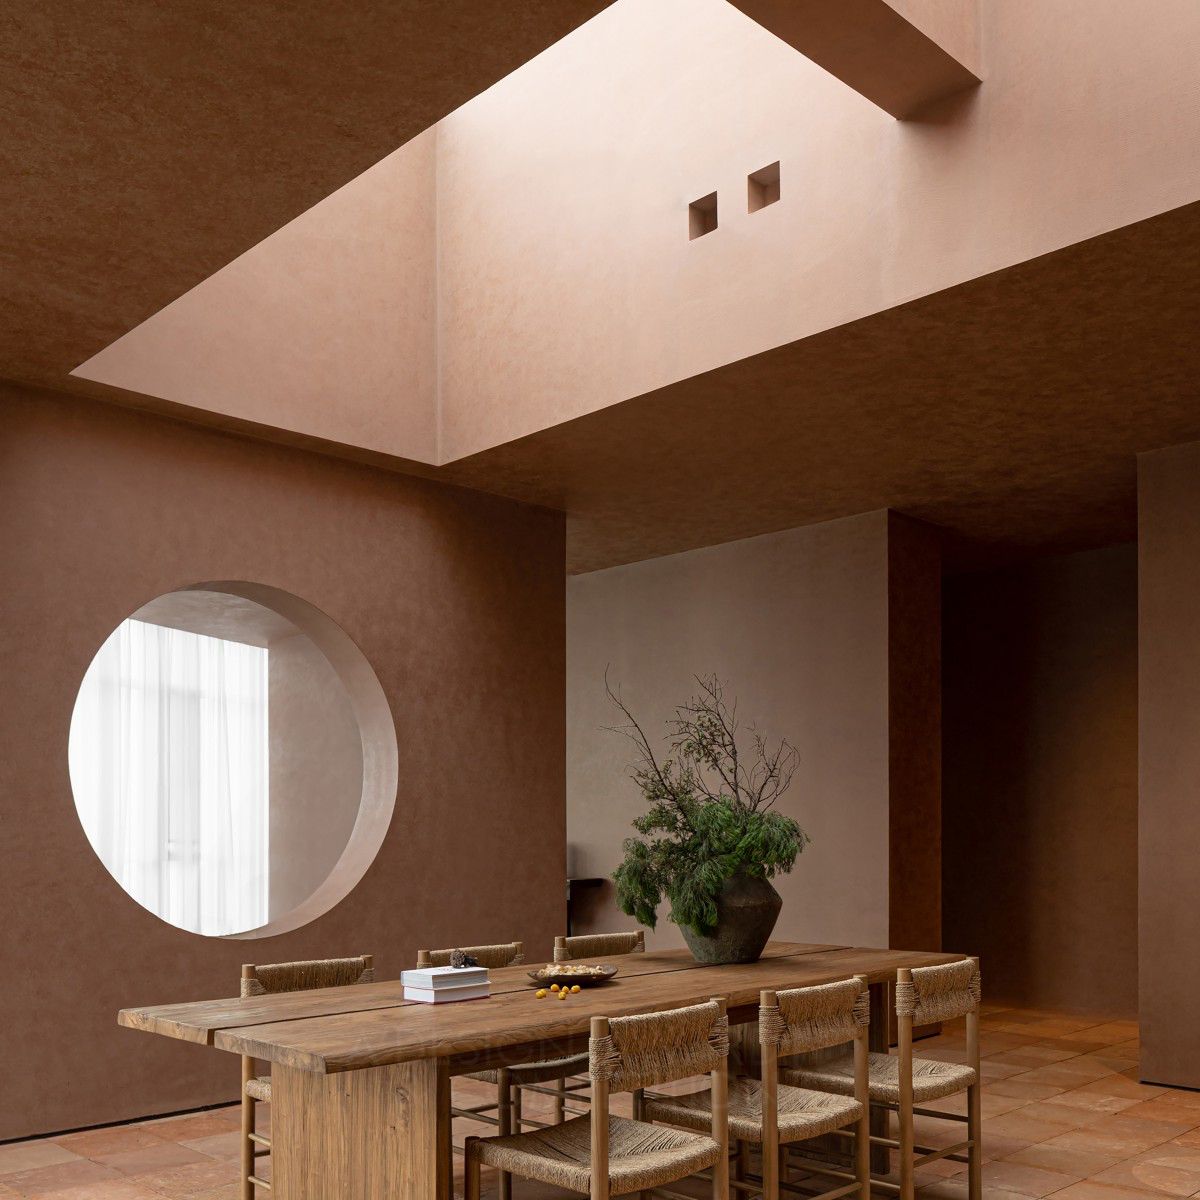 Yueji Diffuse Space Meditation Room by Haibo Liu